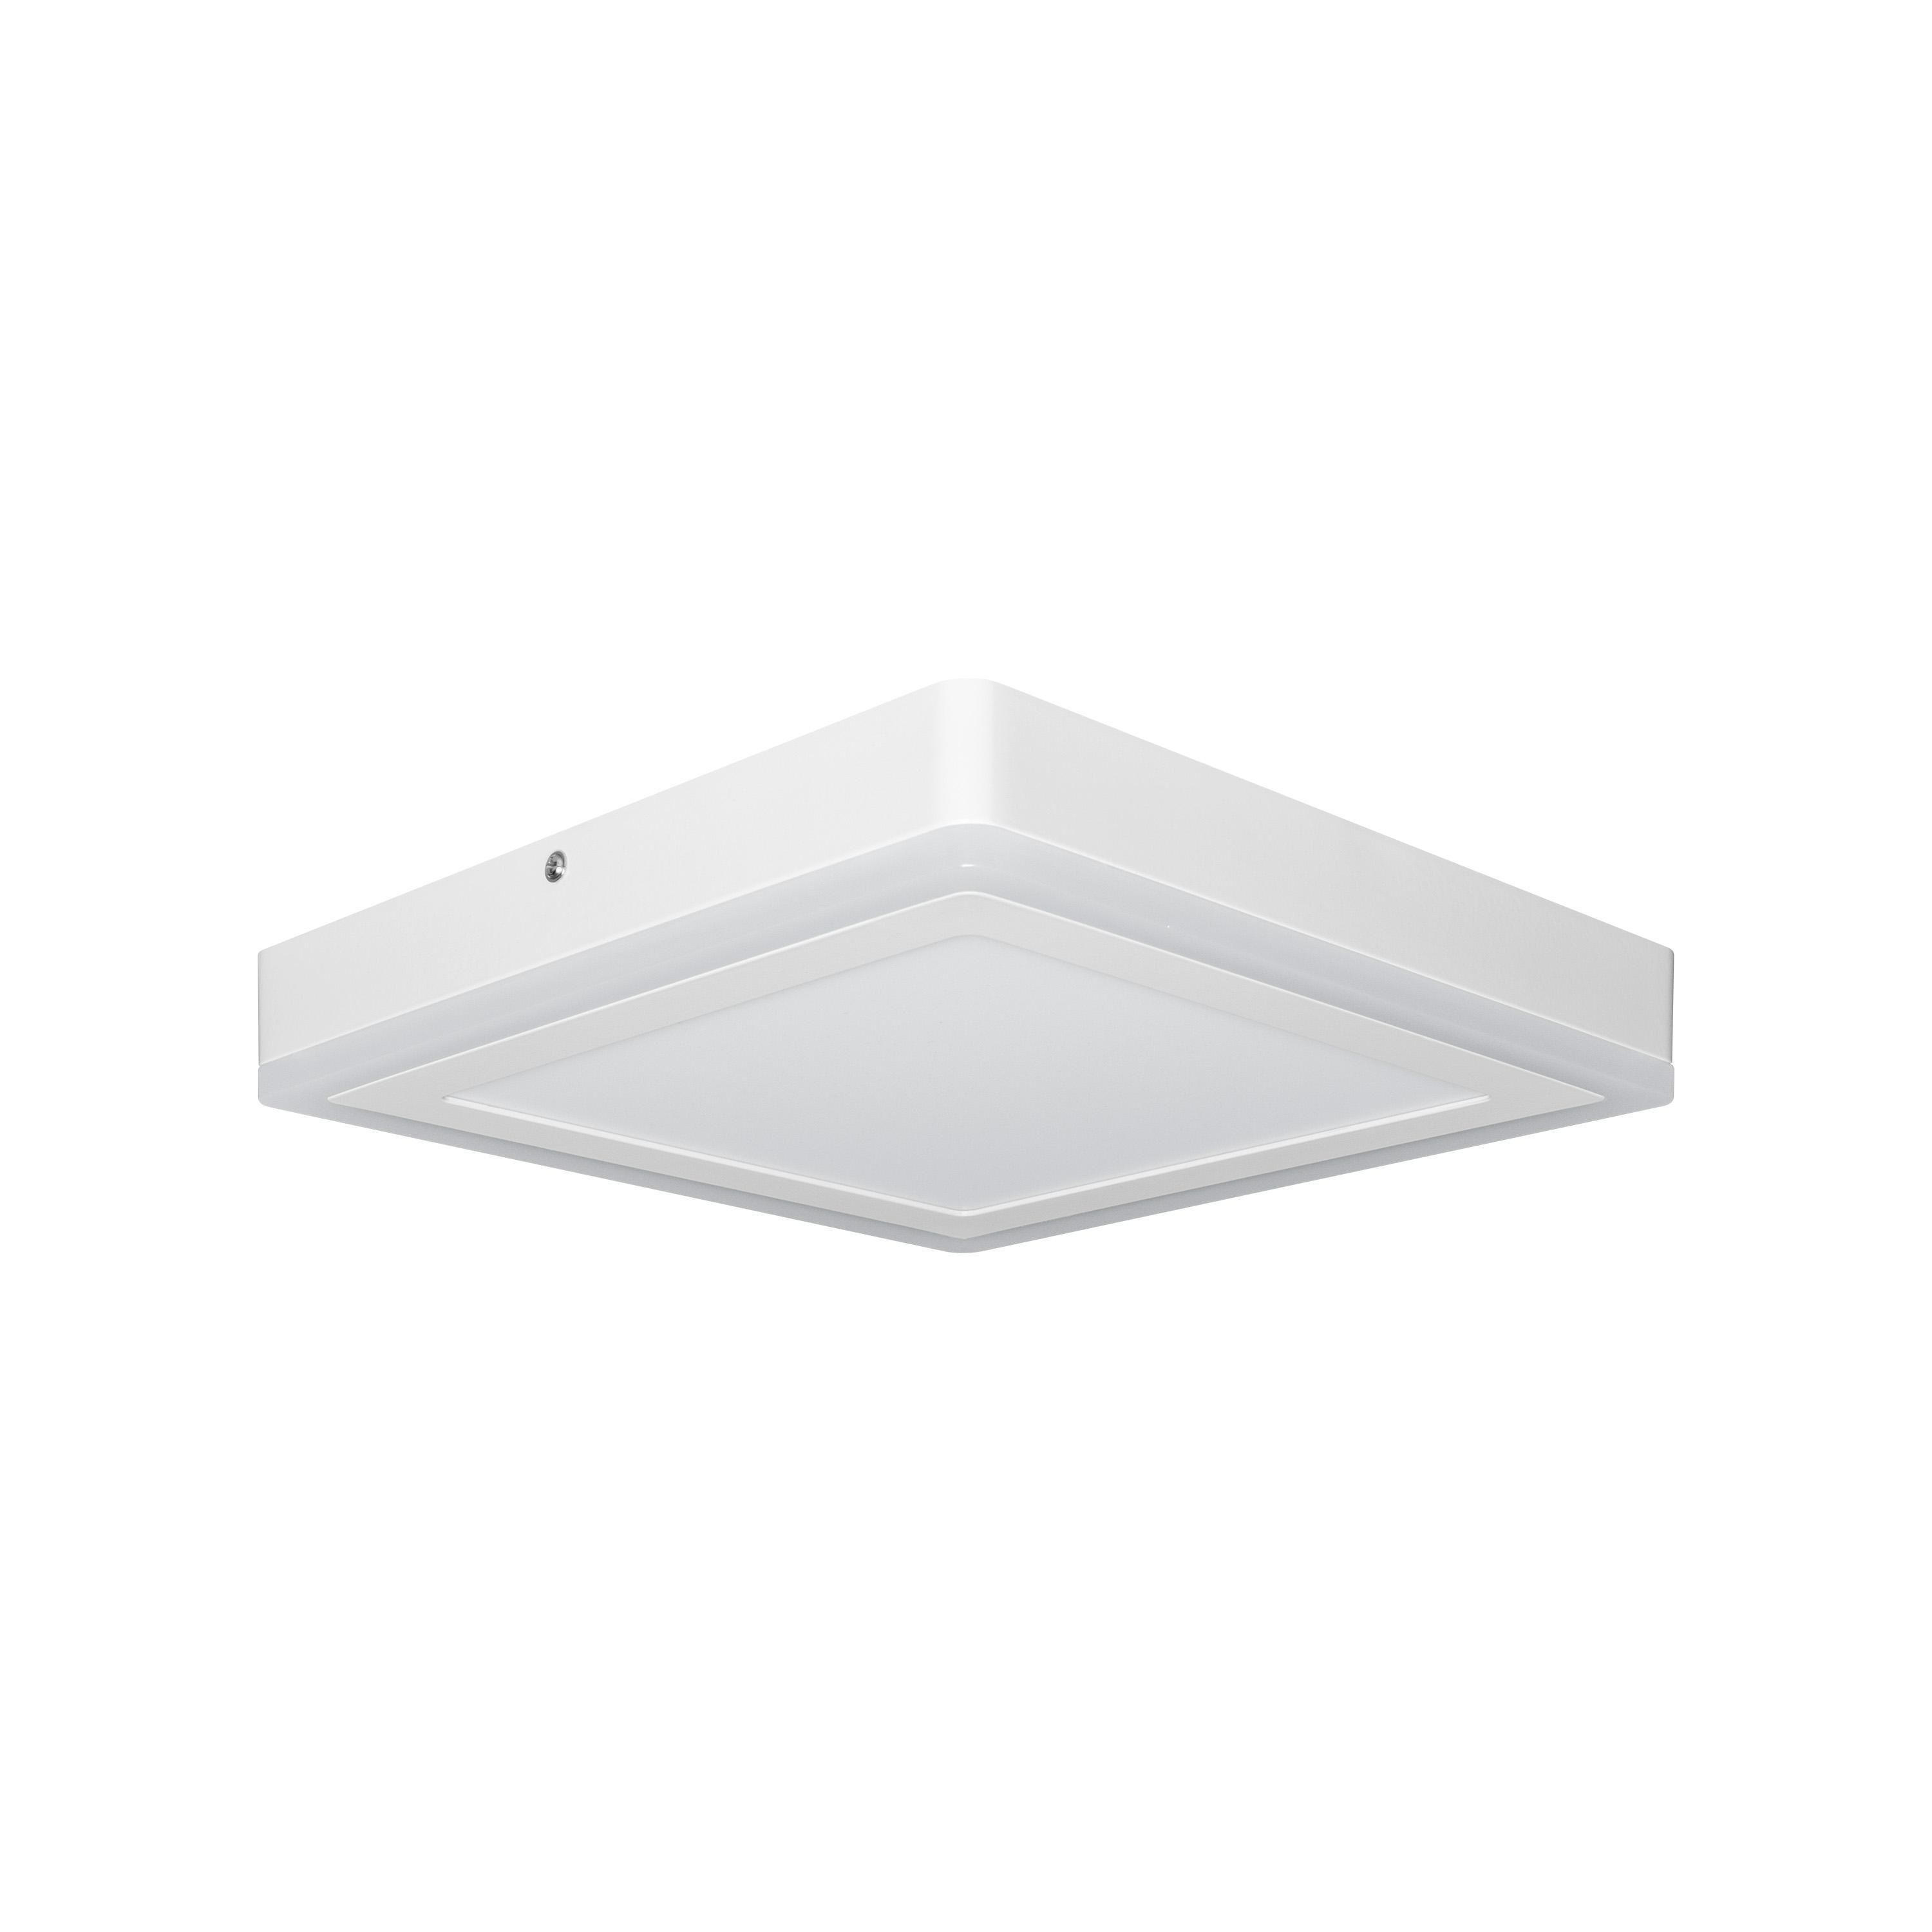 LED-DECKENLEUCHTE LED Click White SQ  - Weiß, Basics, Kunststoff/Metall (29,6/29,6/4,5cm) - Ledvance